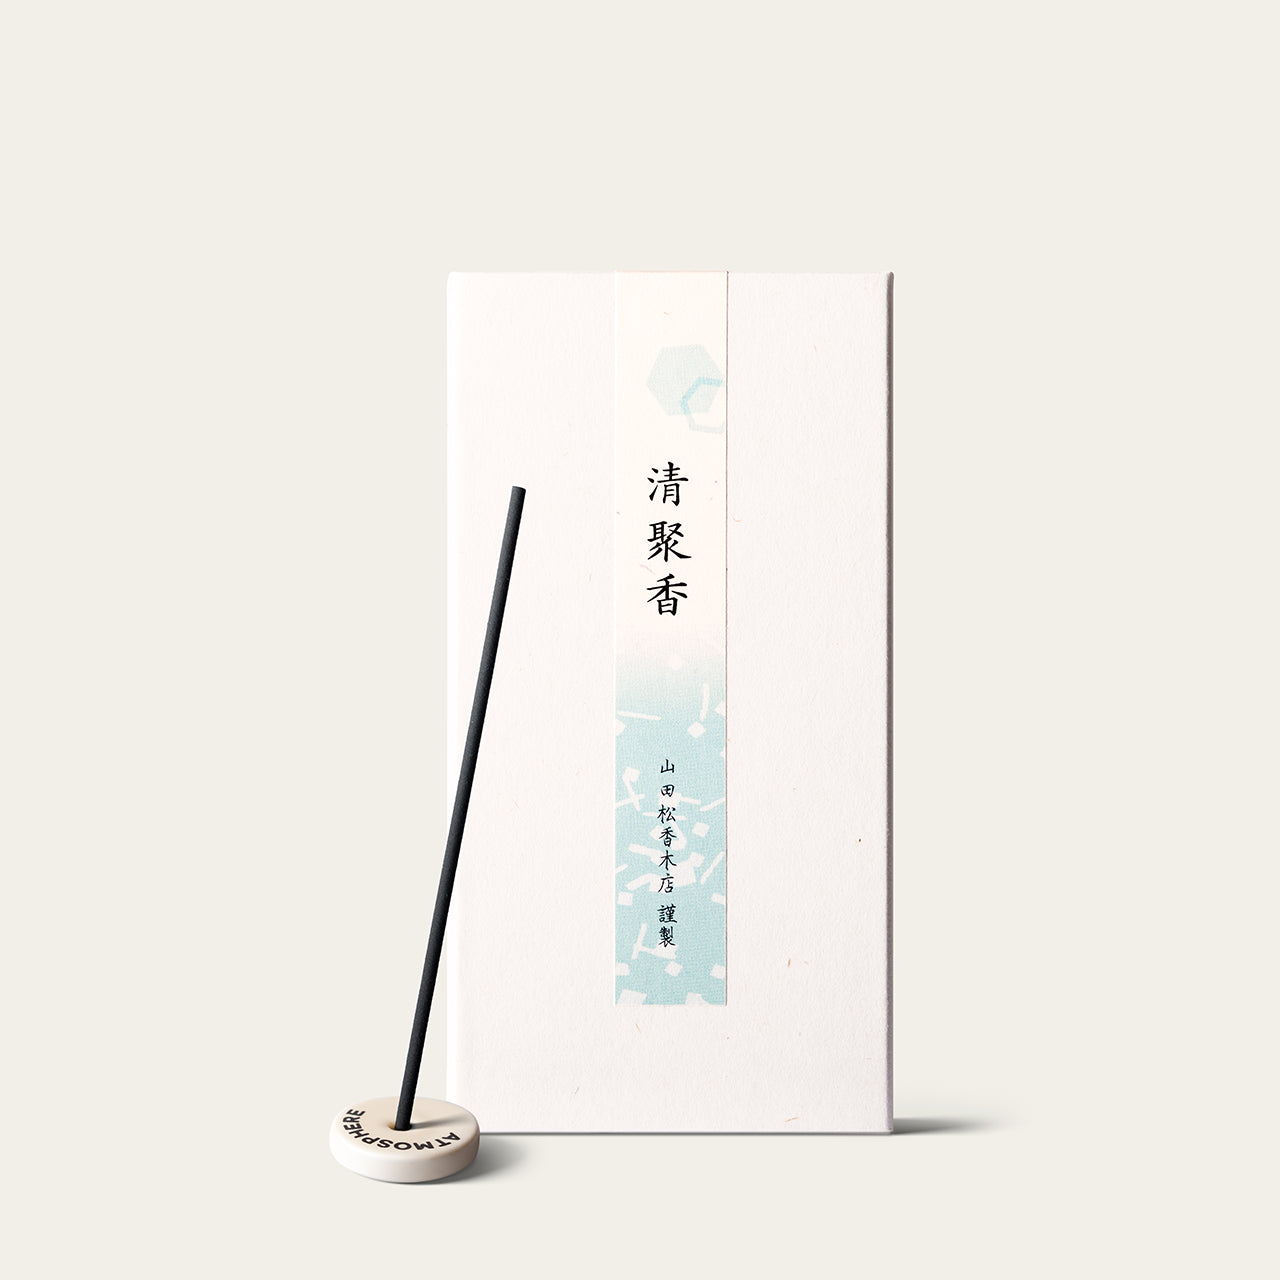 Yamadamatsu Seasonal Clearing Incense Seijuka Japanese incense sticks (30 sticks) with Atmosphere ceramic incense holder